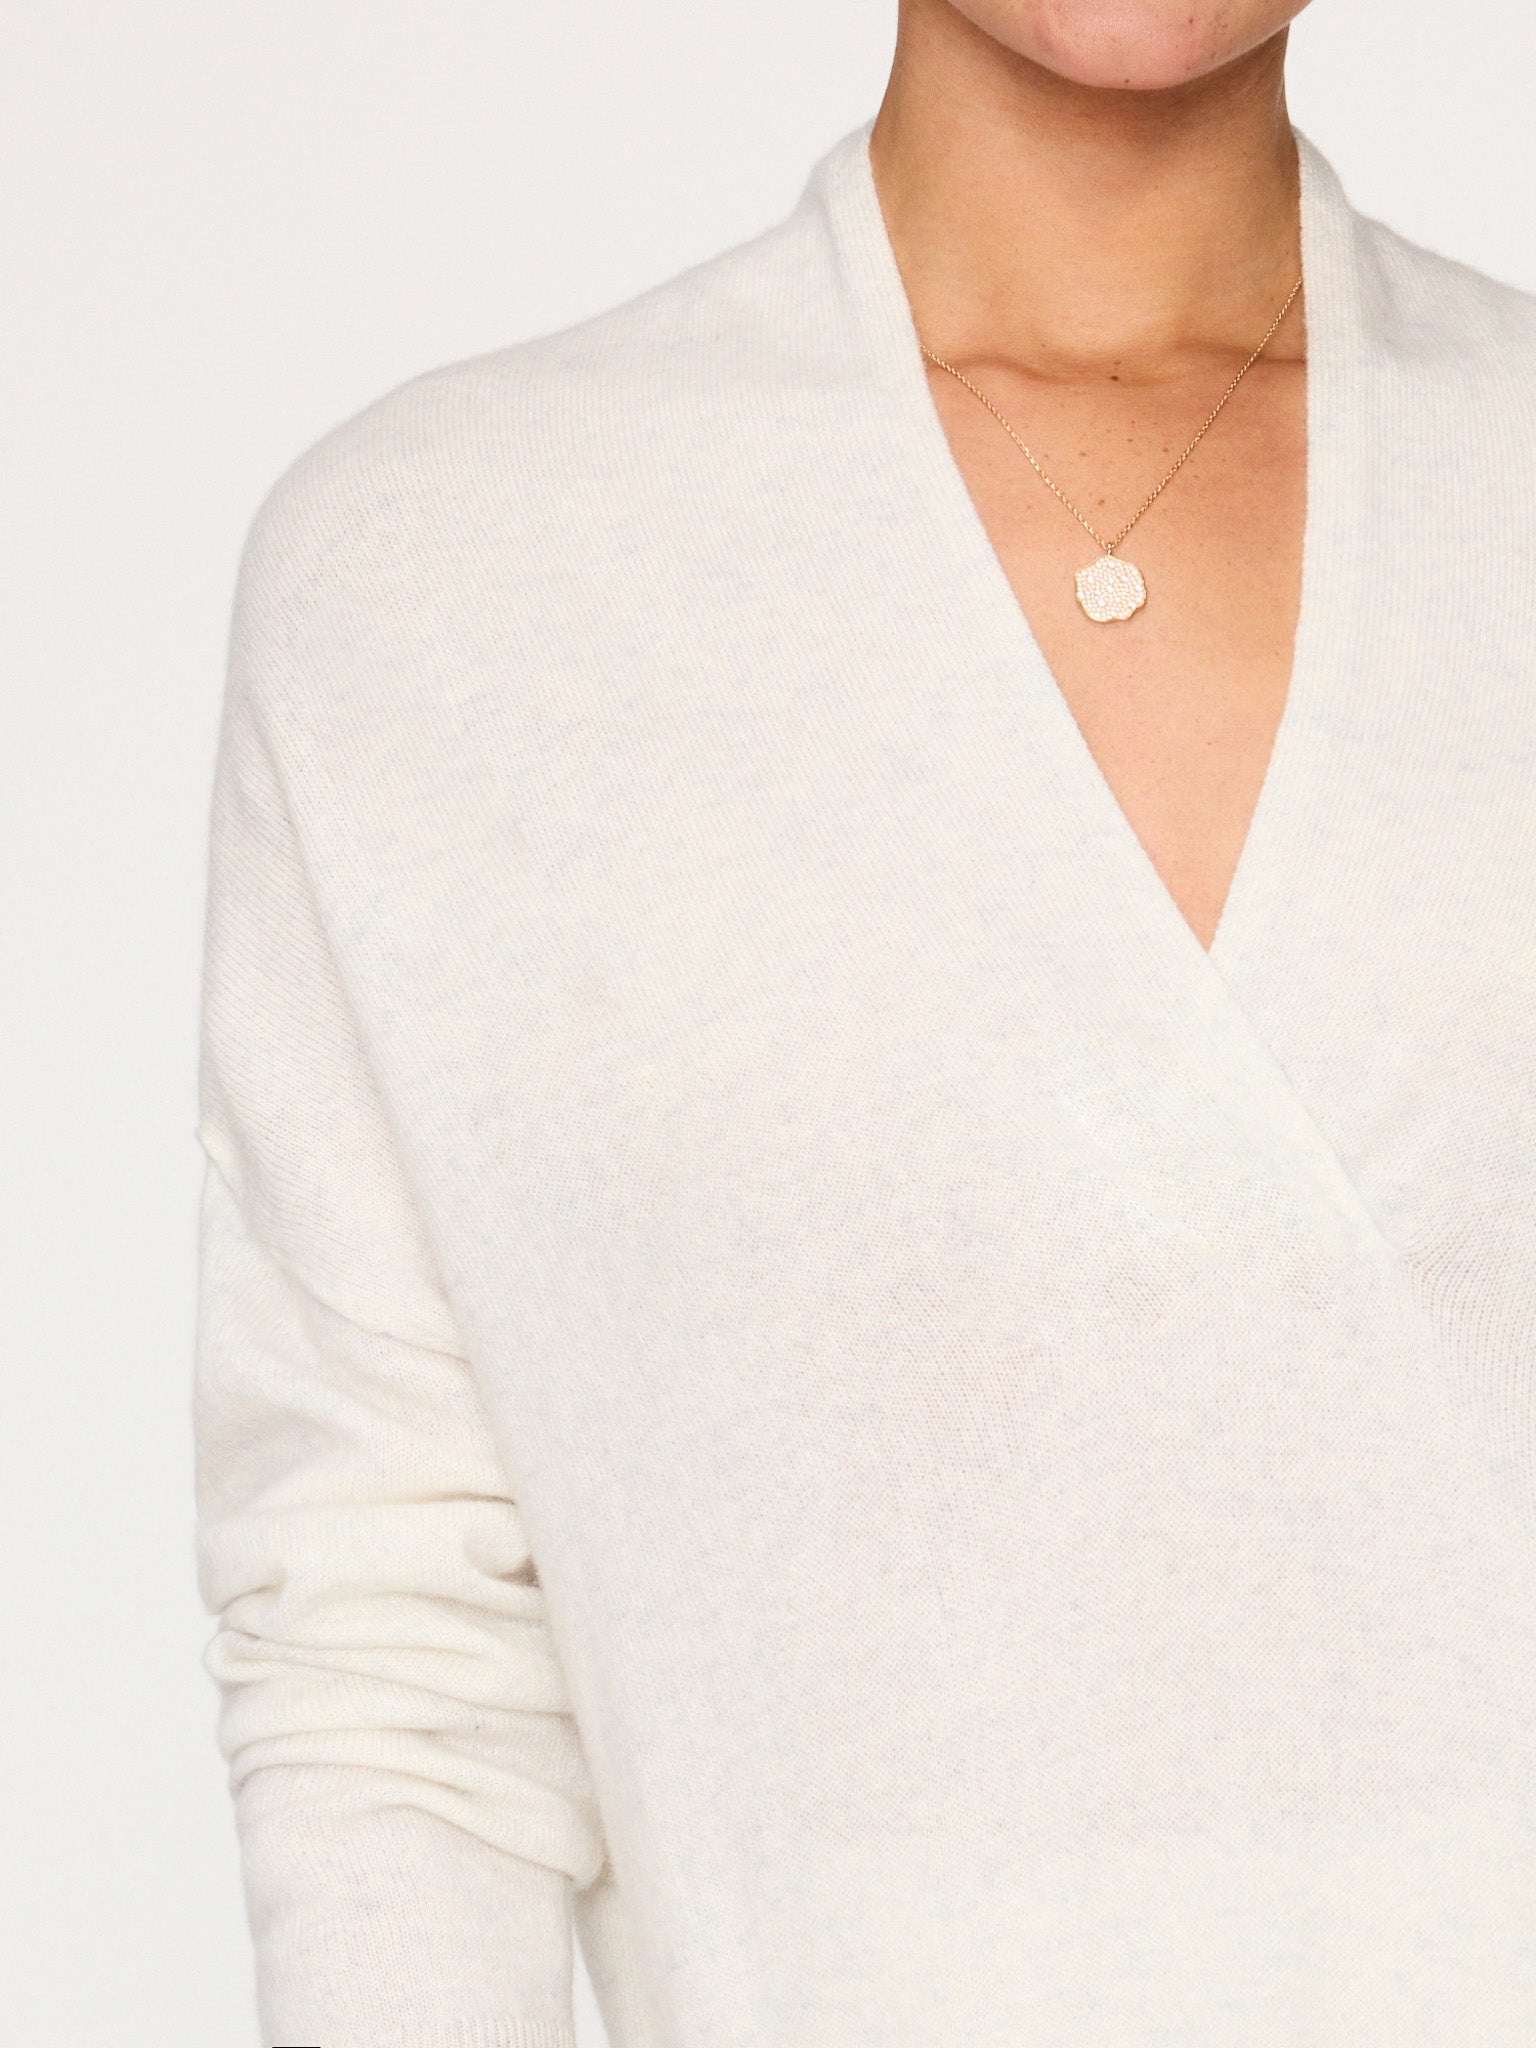 Siena v-neck pullover white sweater close up 